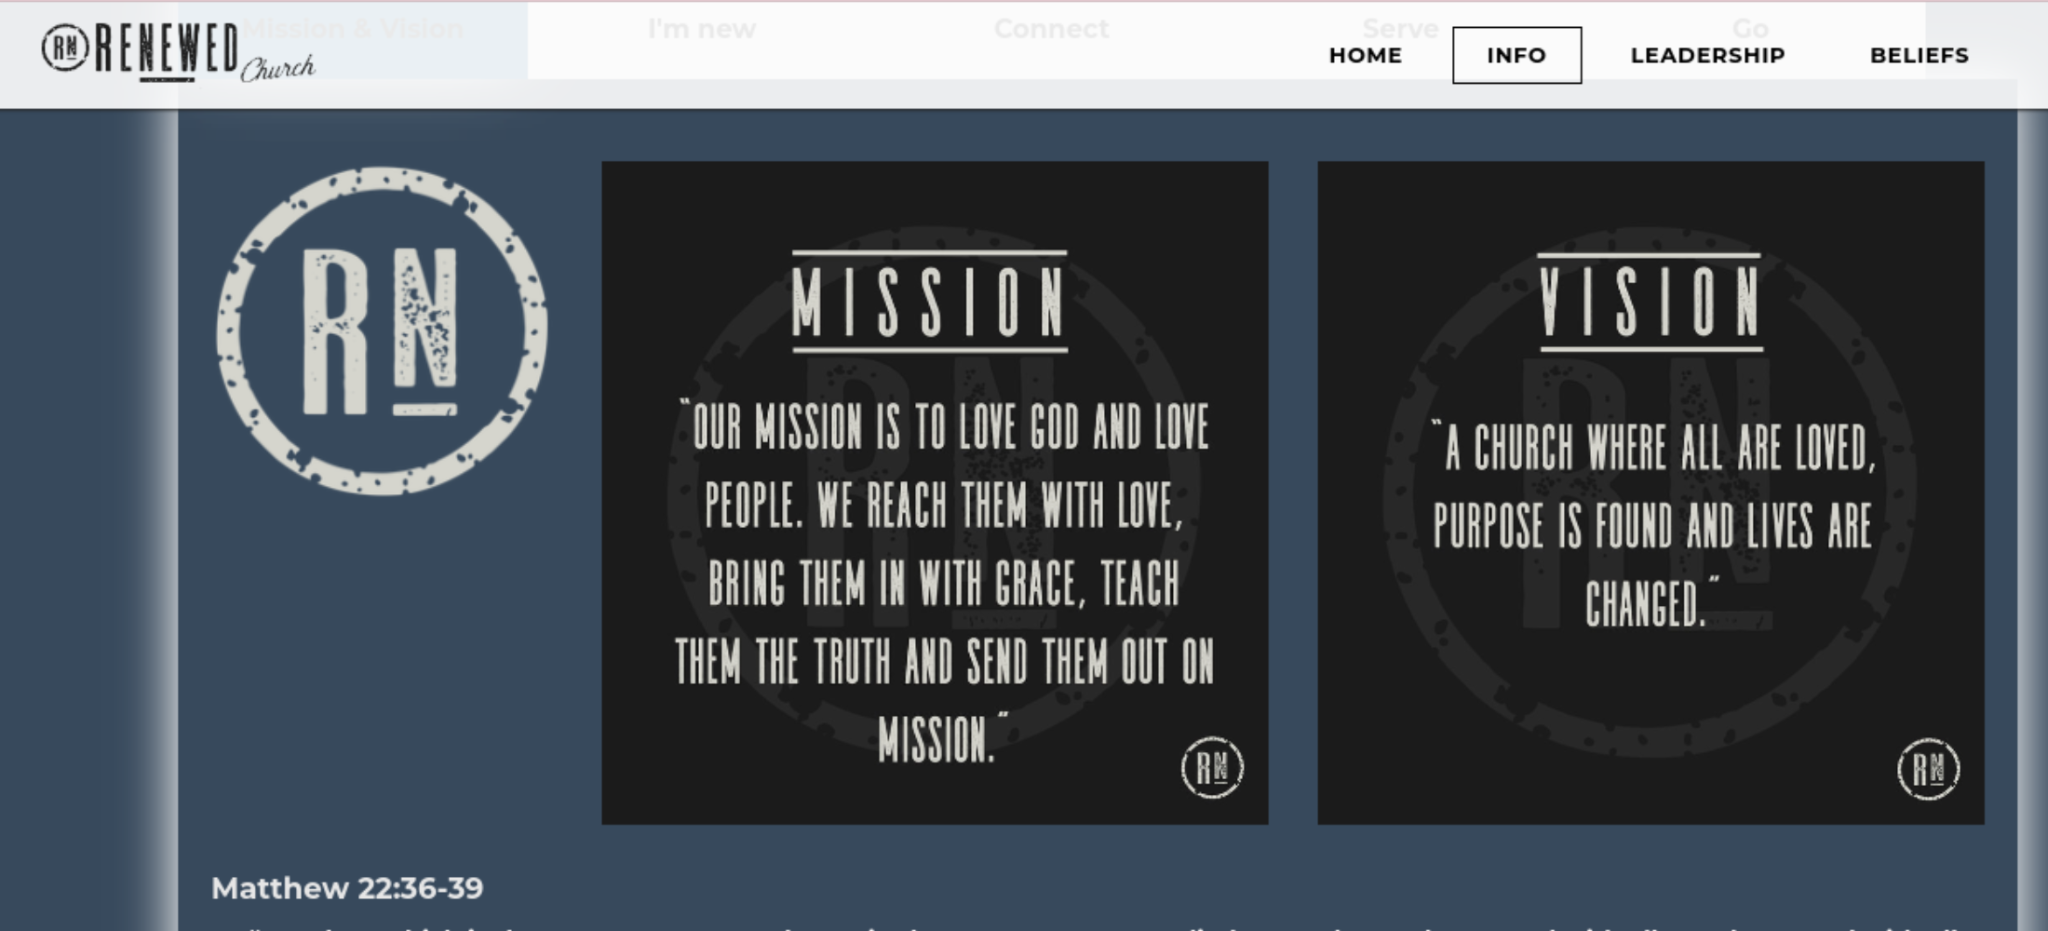 Screenshot of Renewed Church's vision statement on their website. 